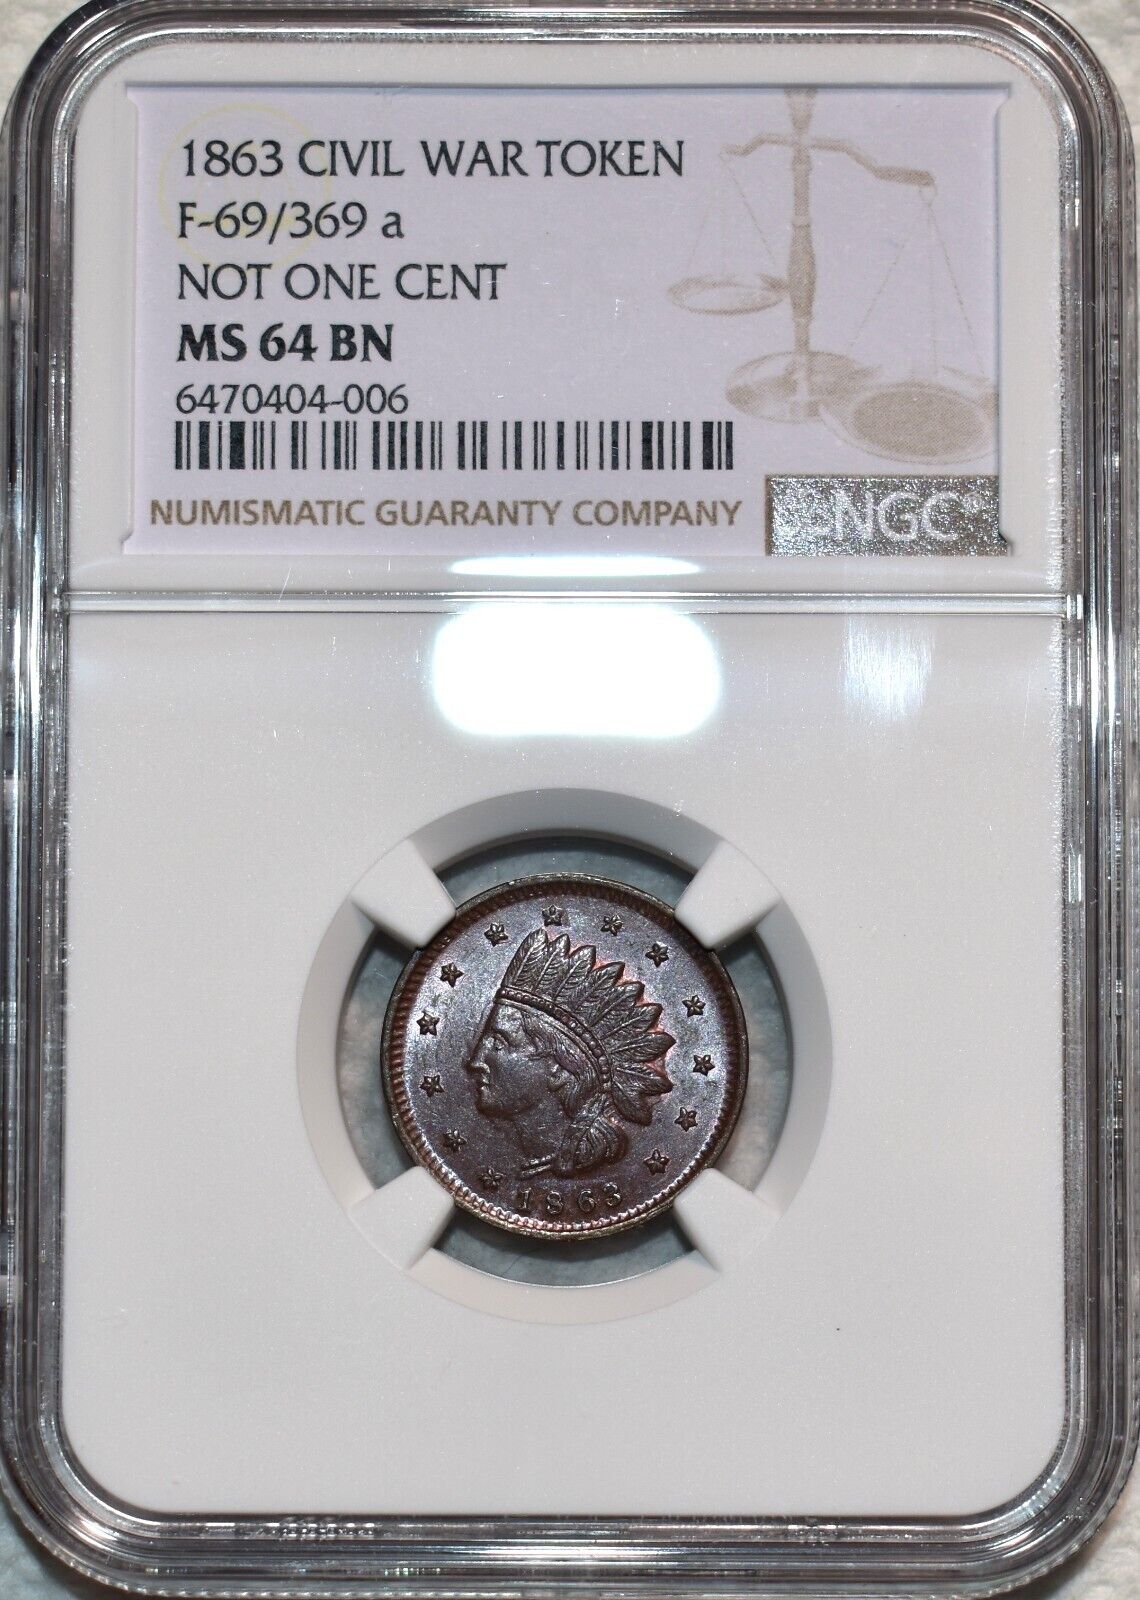 NGC MS-64 BN 1863 Indian Head/Not One Cent Civil War Token, F-69/369a, R-3